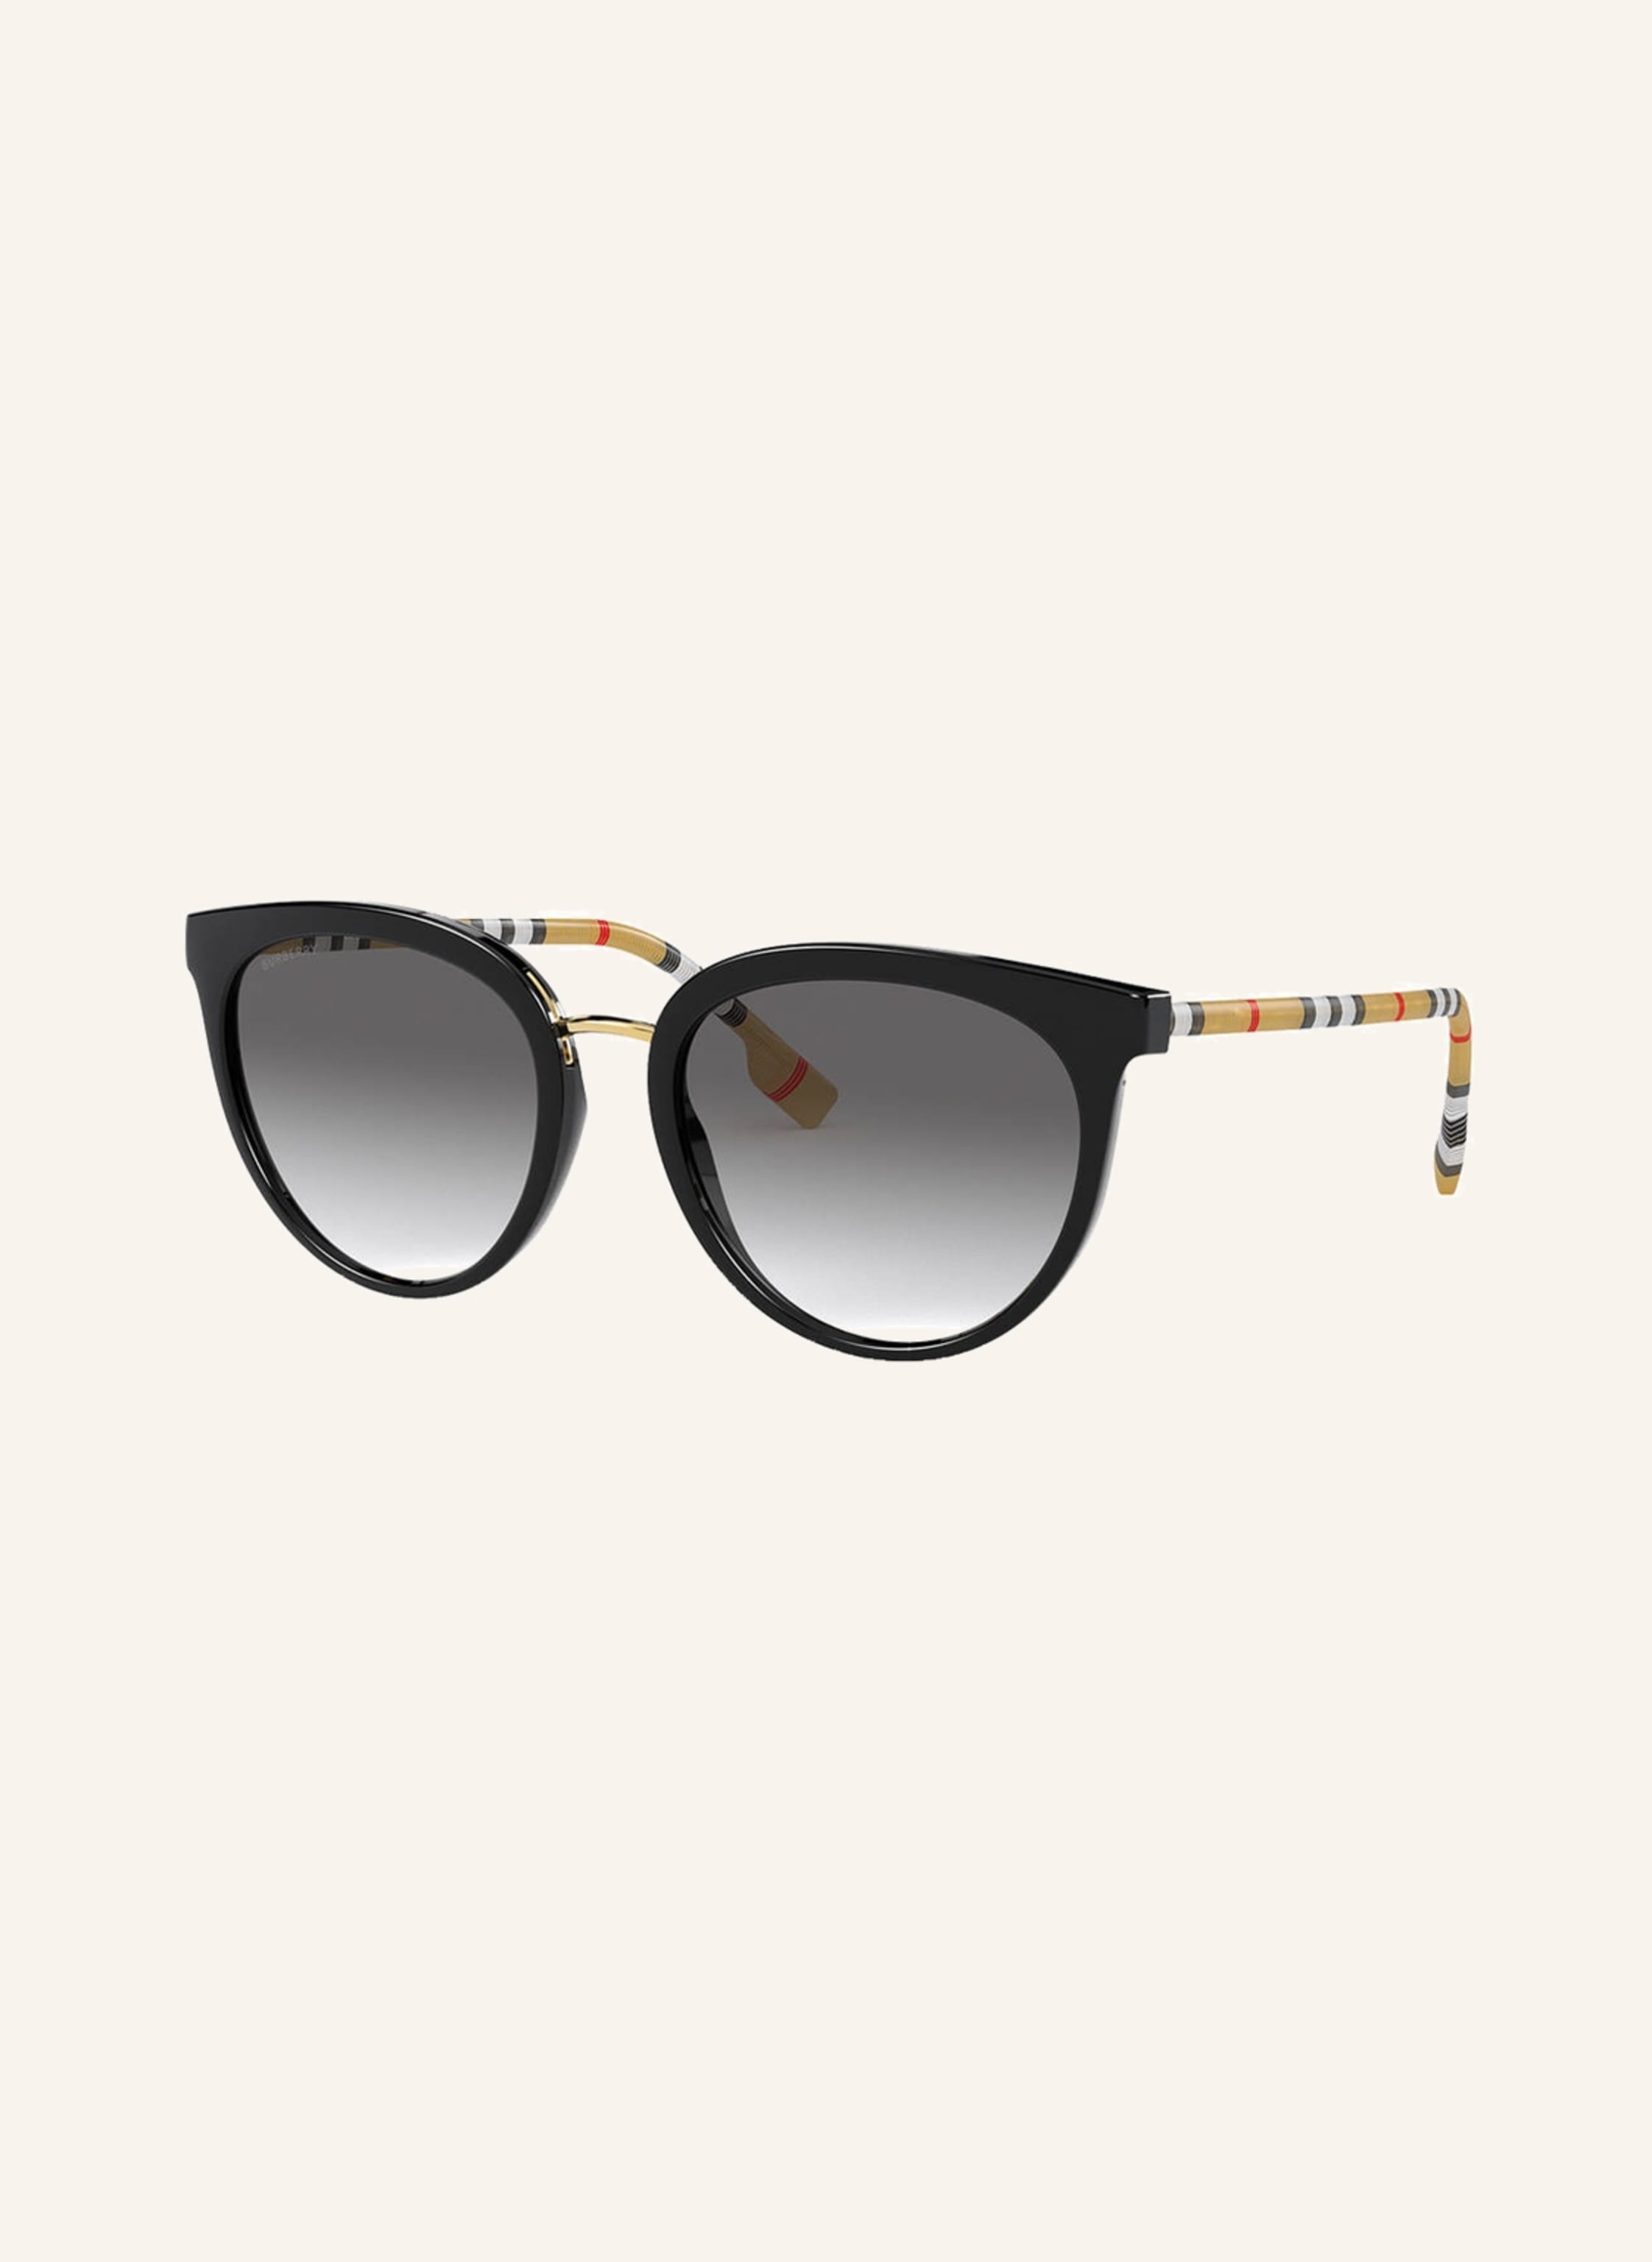 BURBERRY Sunglasses BE4316 in 385311 - black/black gradient | Breuninger